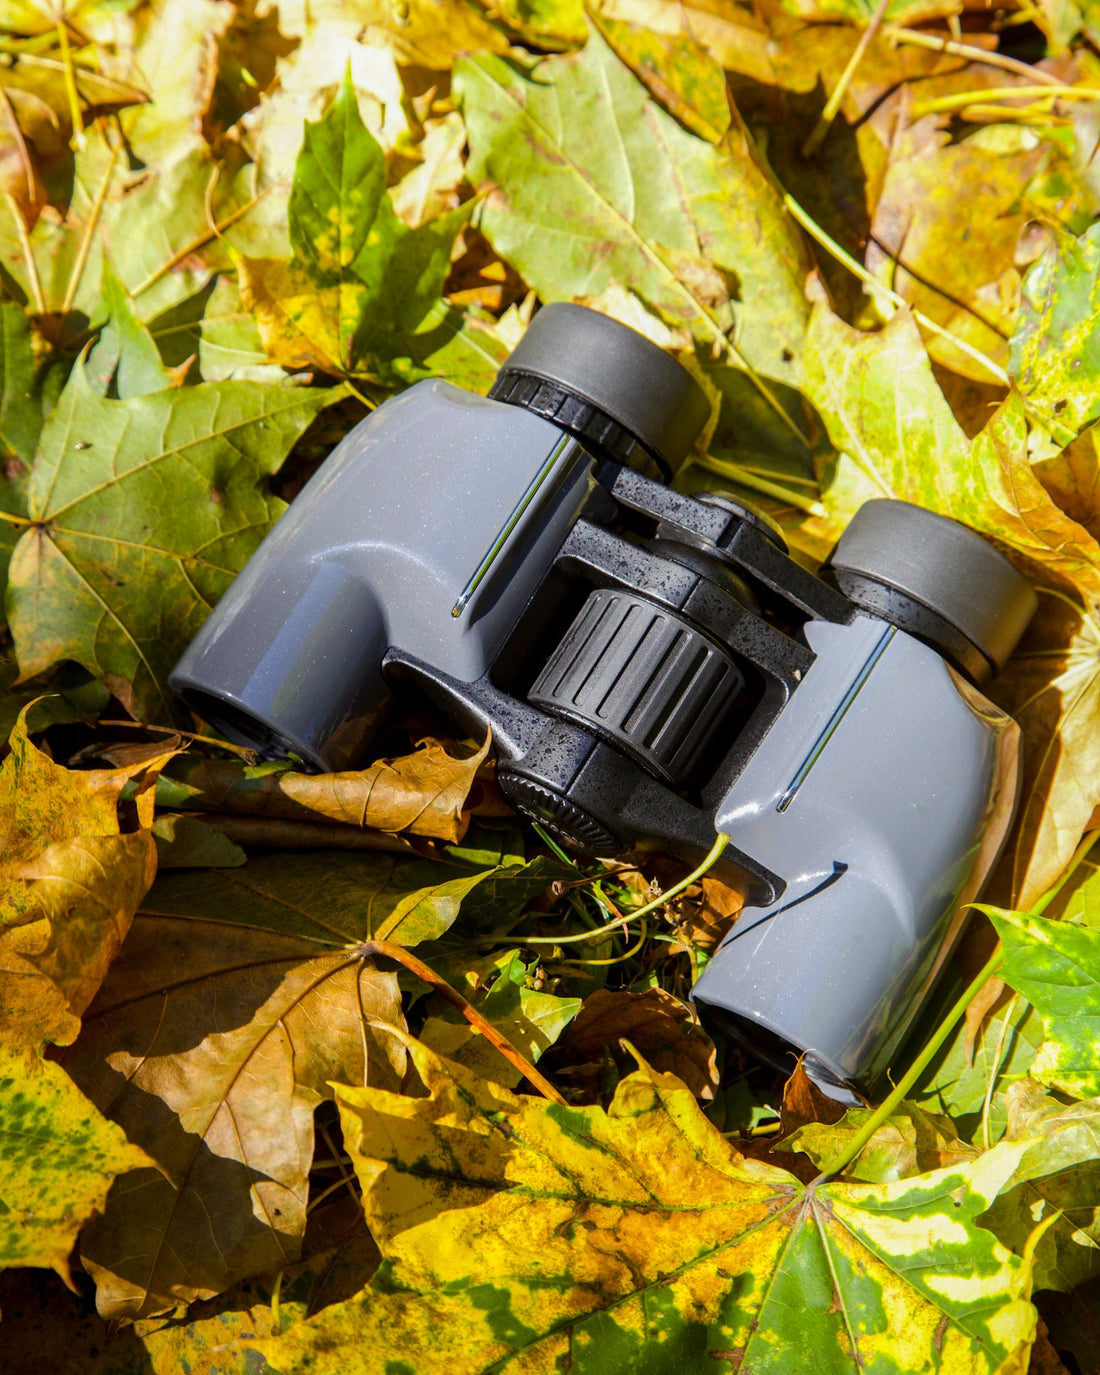 Carson Mantaray 8x24mm BAK-4 High-Index Porro Prism Compact Binoculars MR-824